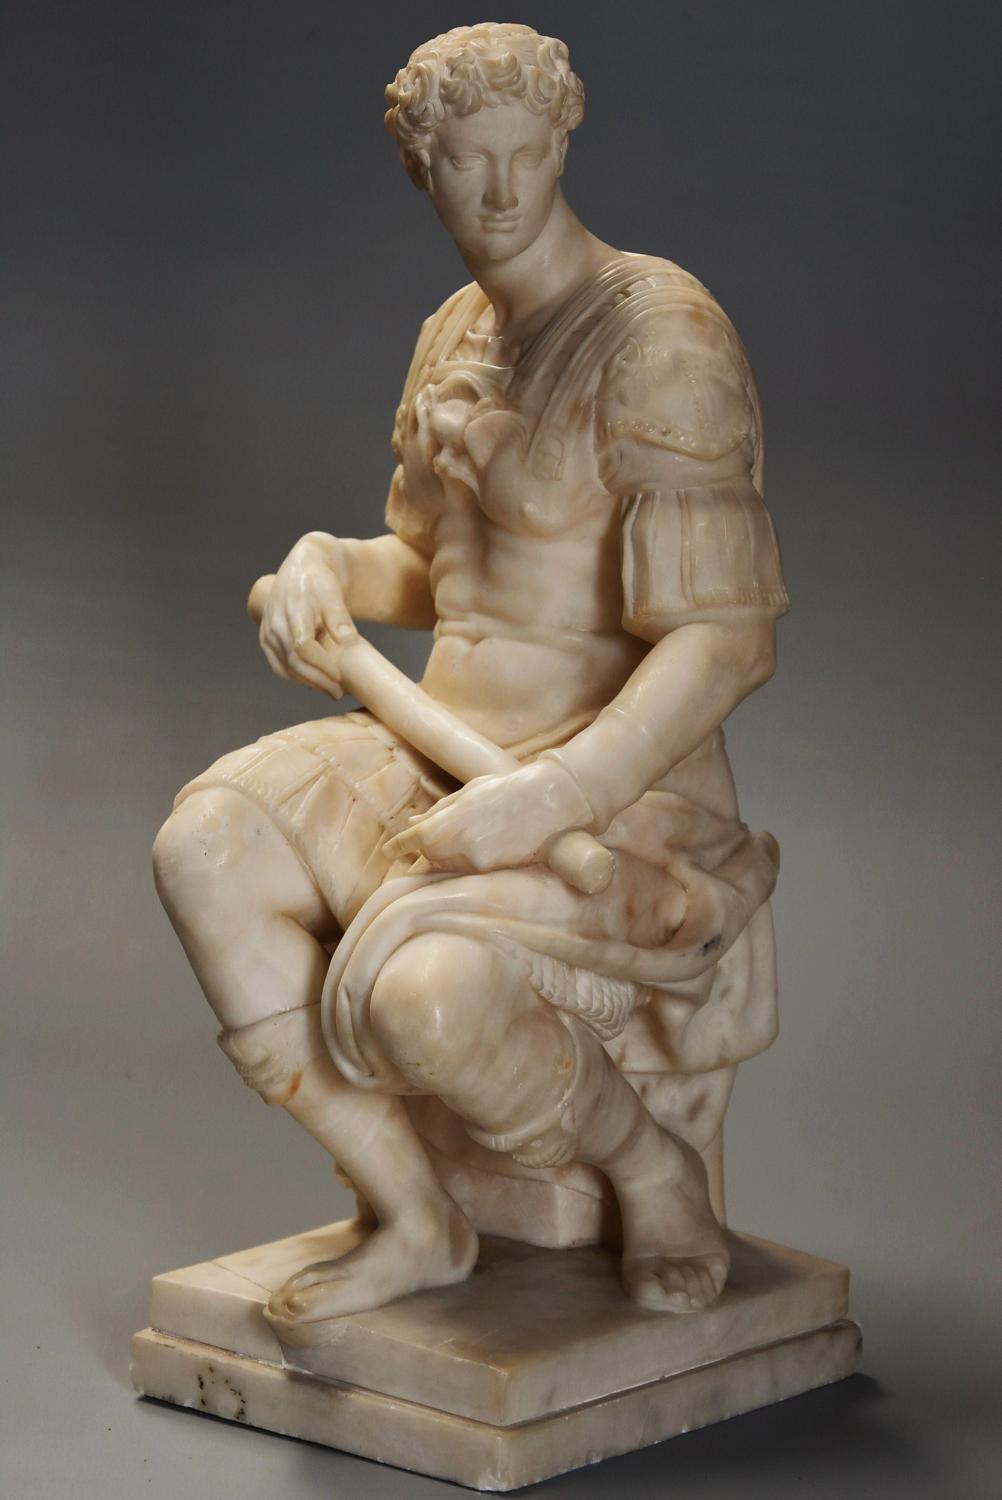 19thc Italian sculpture of Guiliano de Medici,original by Michelangelo